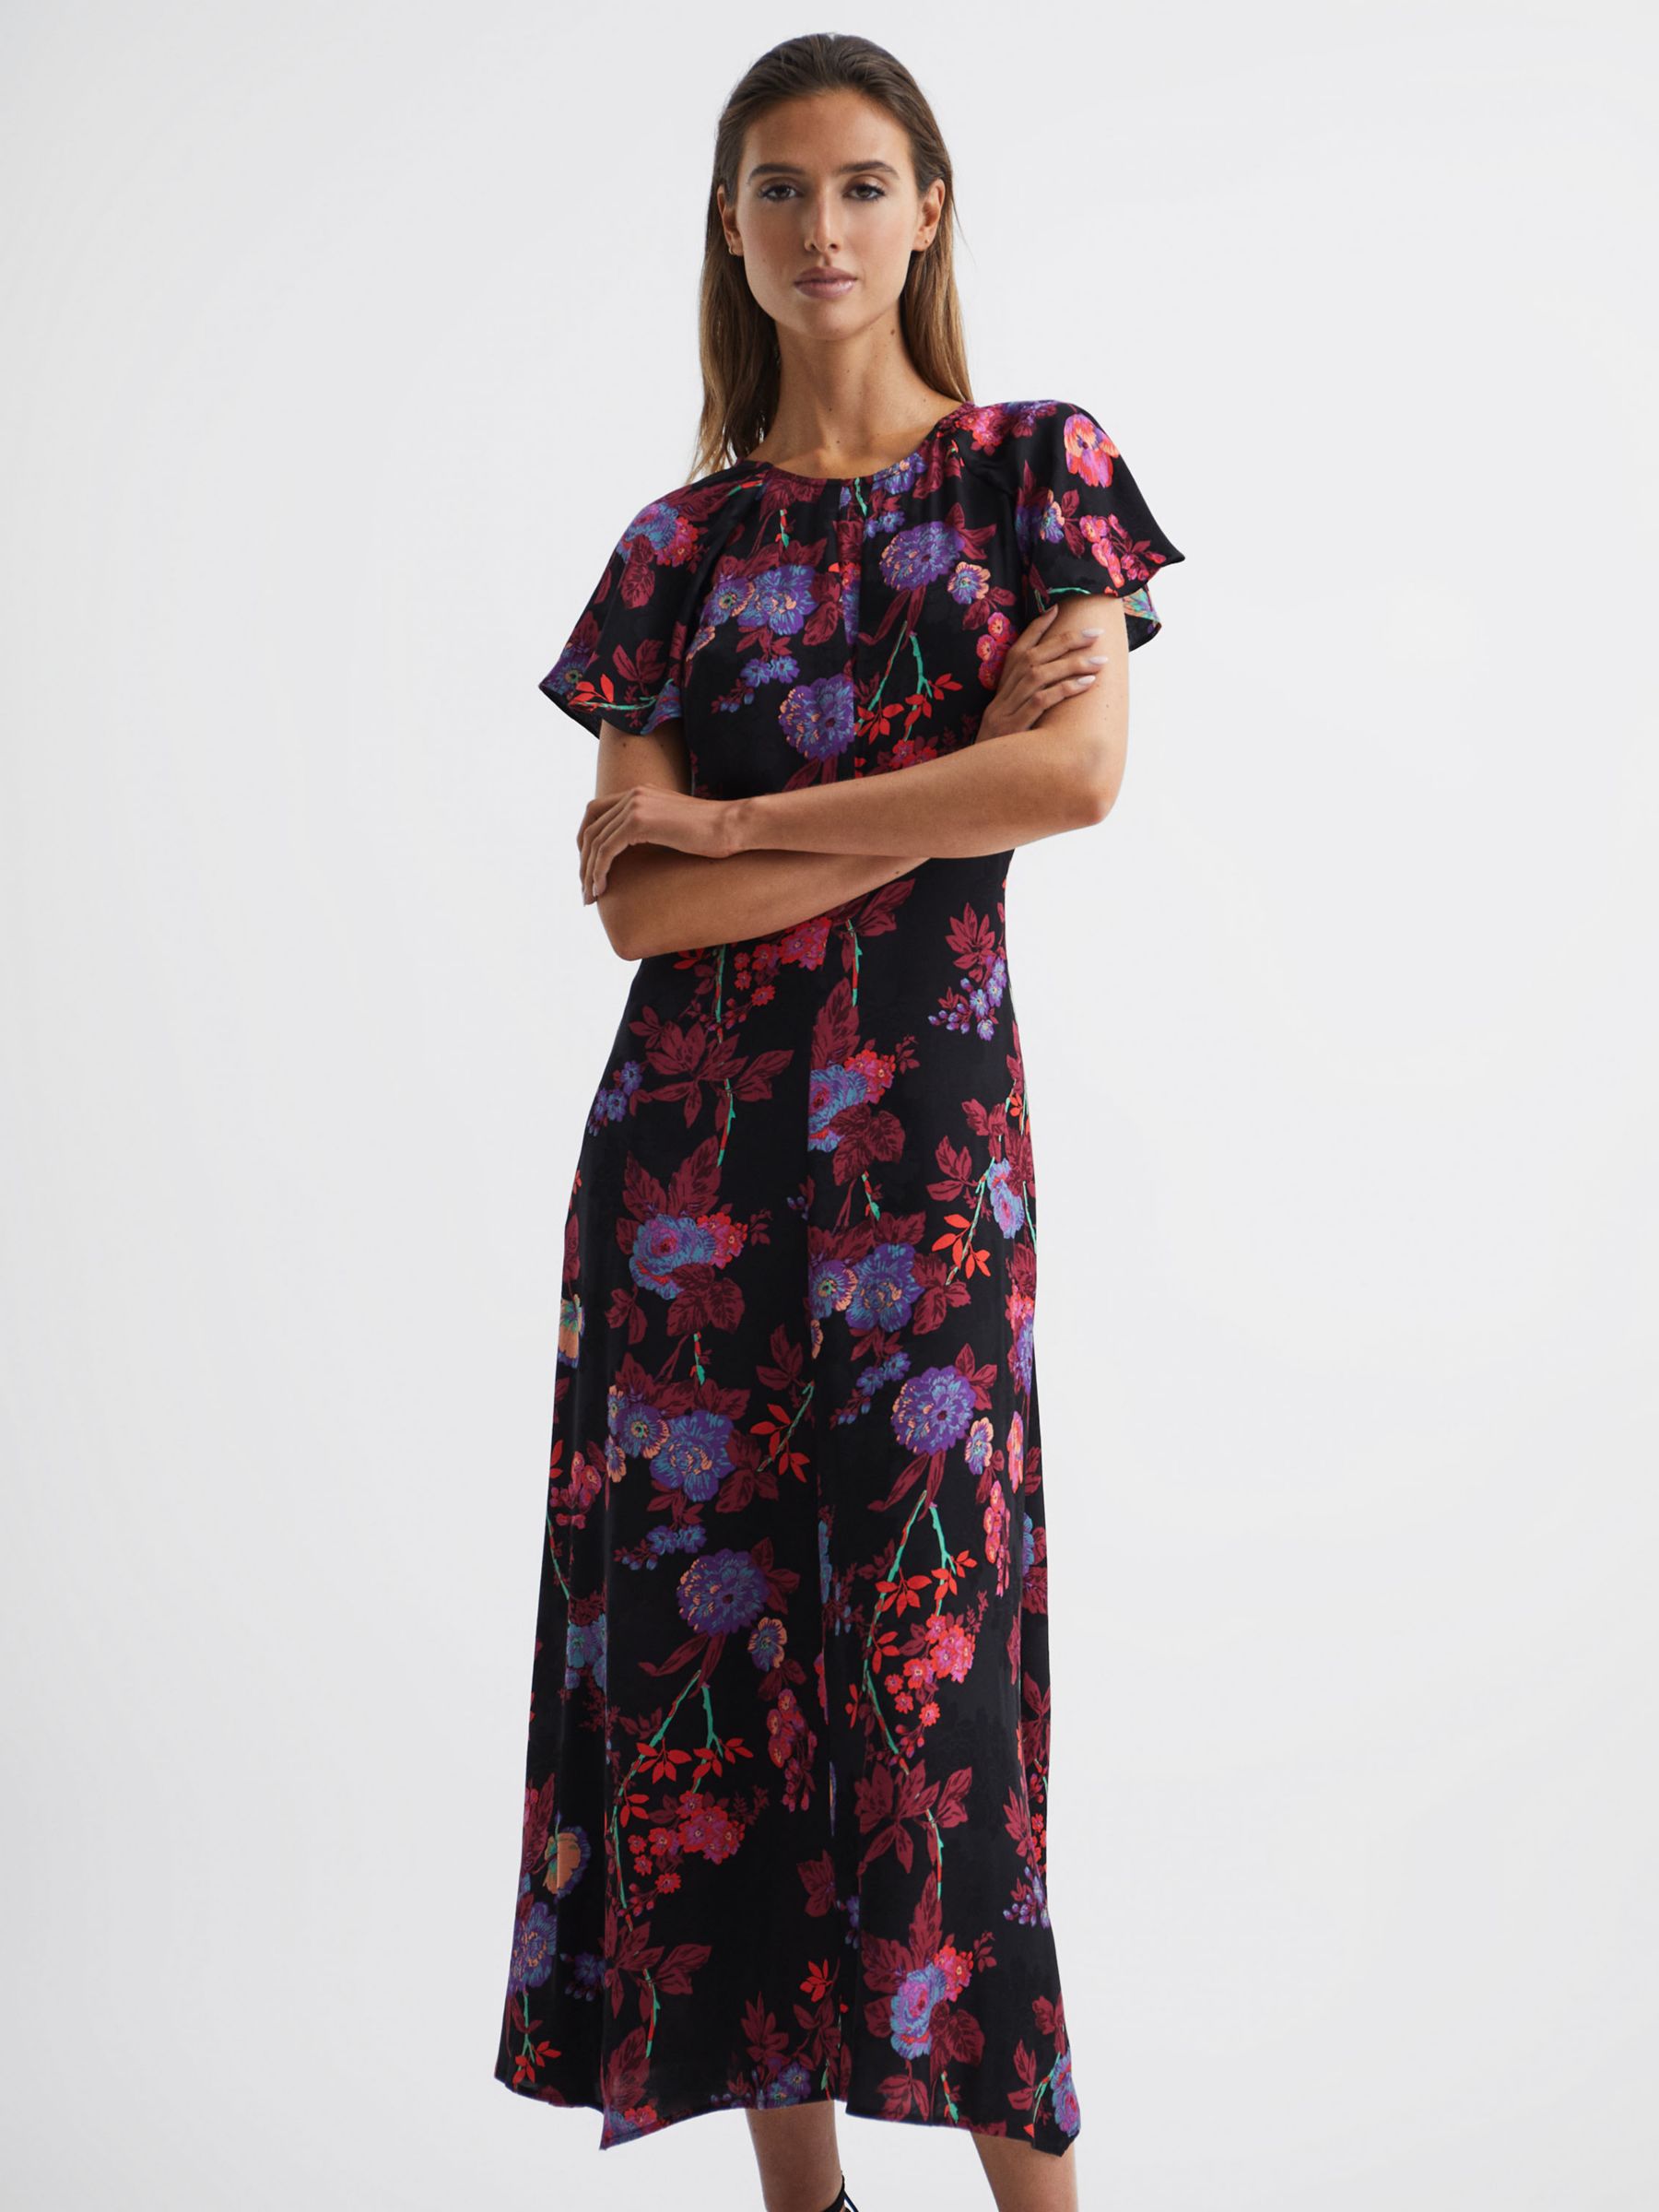 Reiss Leni Floral Midi Dress, Black/Pink at John Lewis & Partners